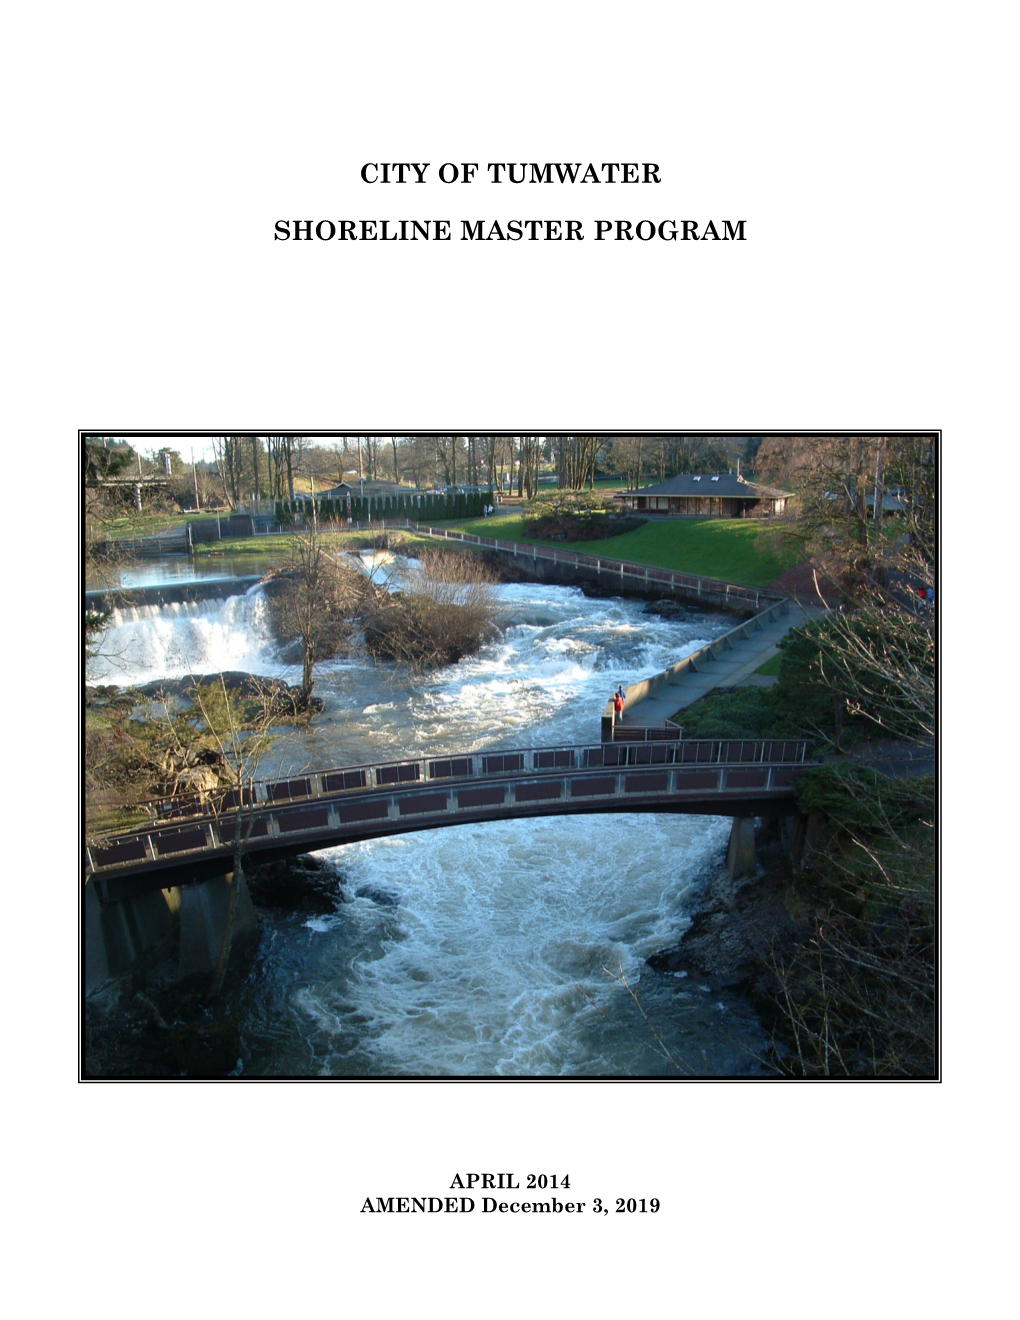 City of Tumwater Shoreline Master Program